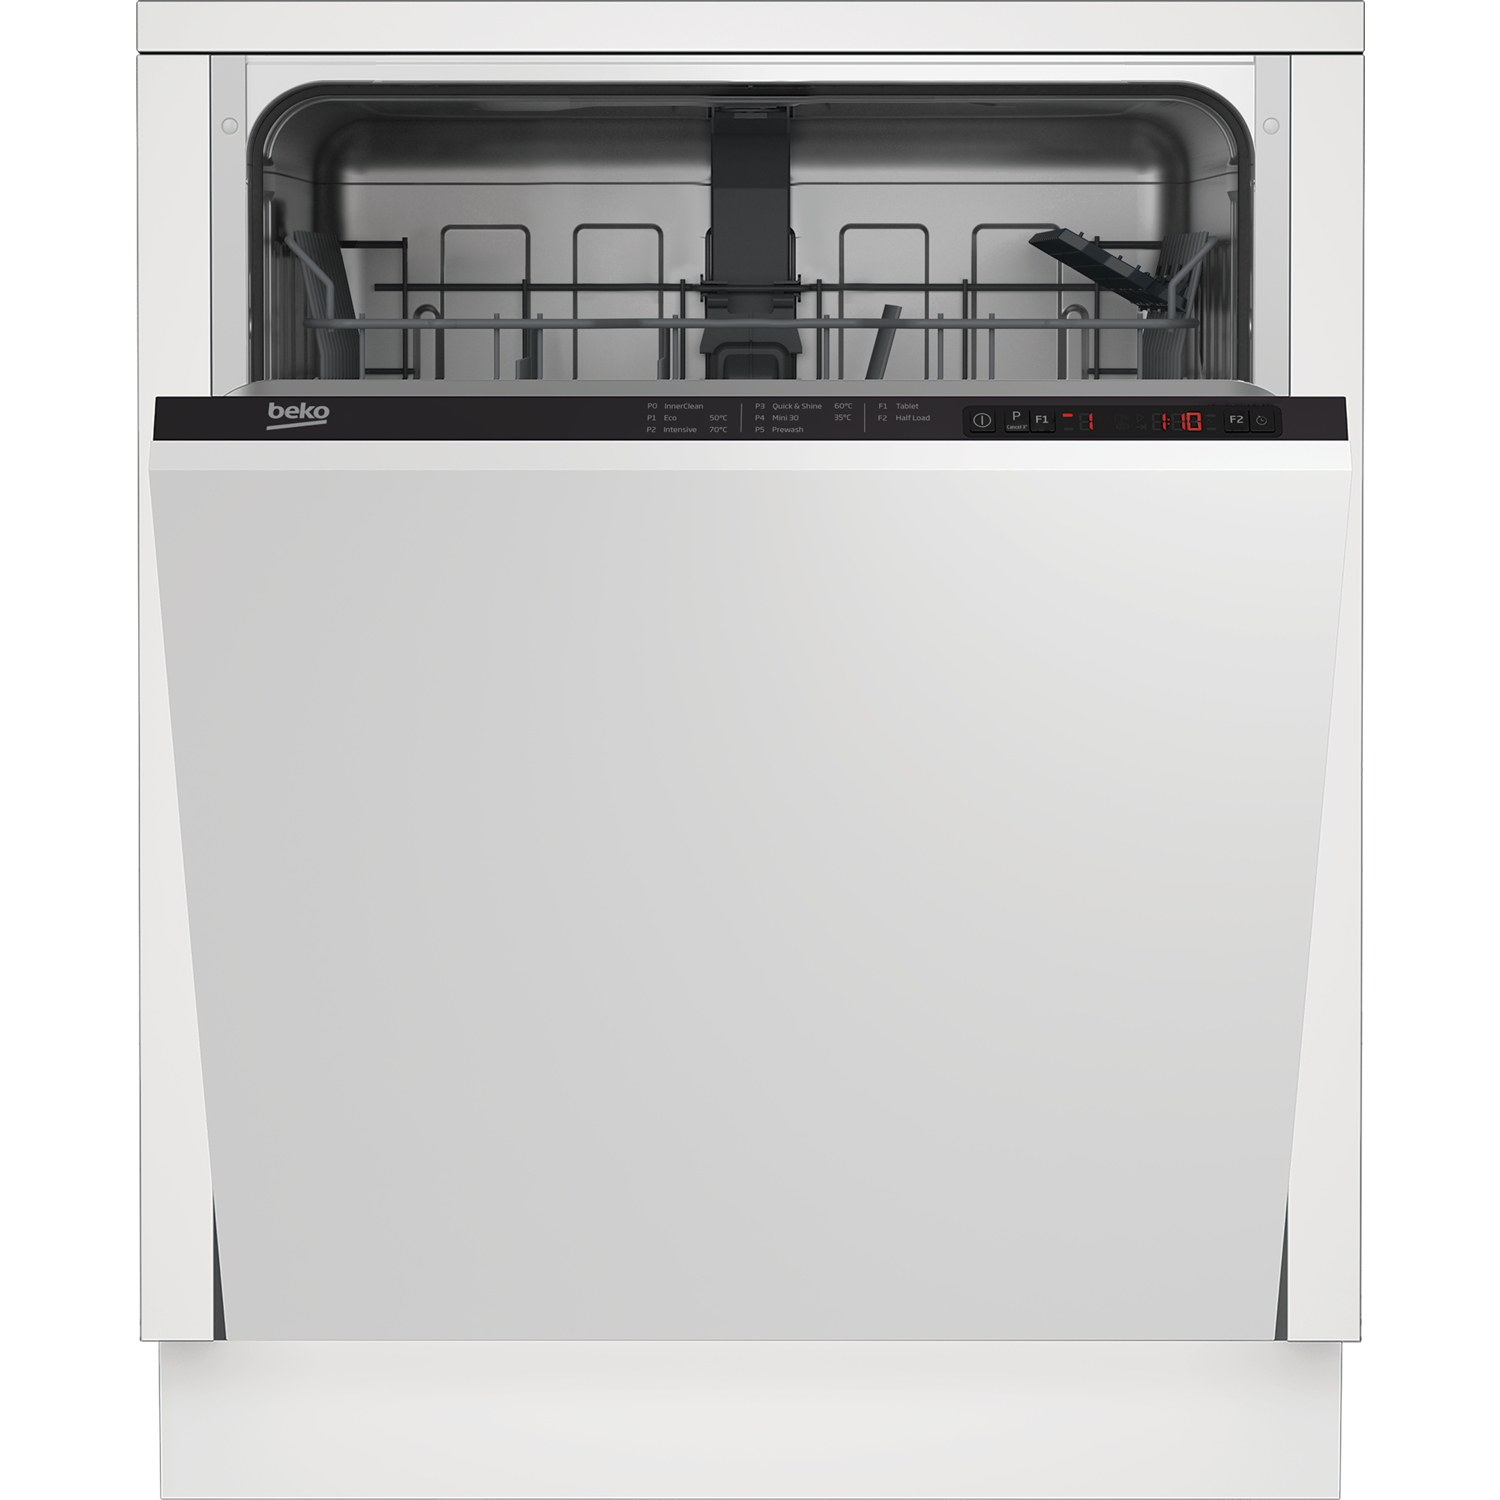 Beko DIN15322 Full-size Fully Integrated Dishwasher